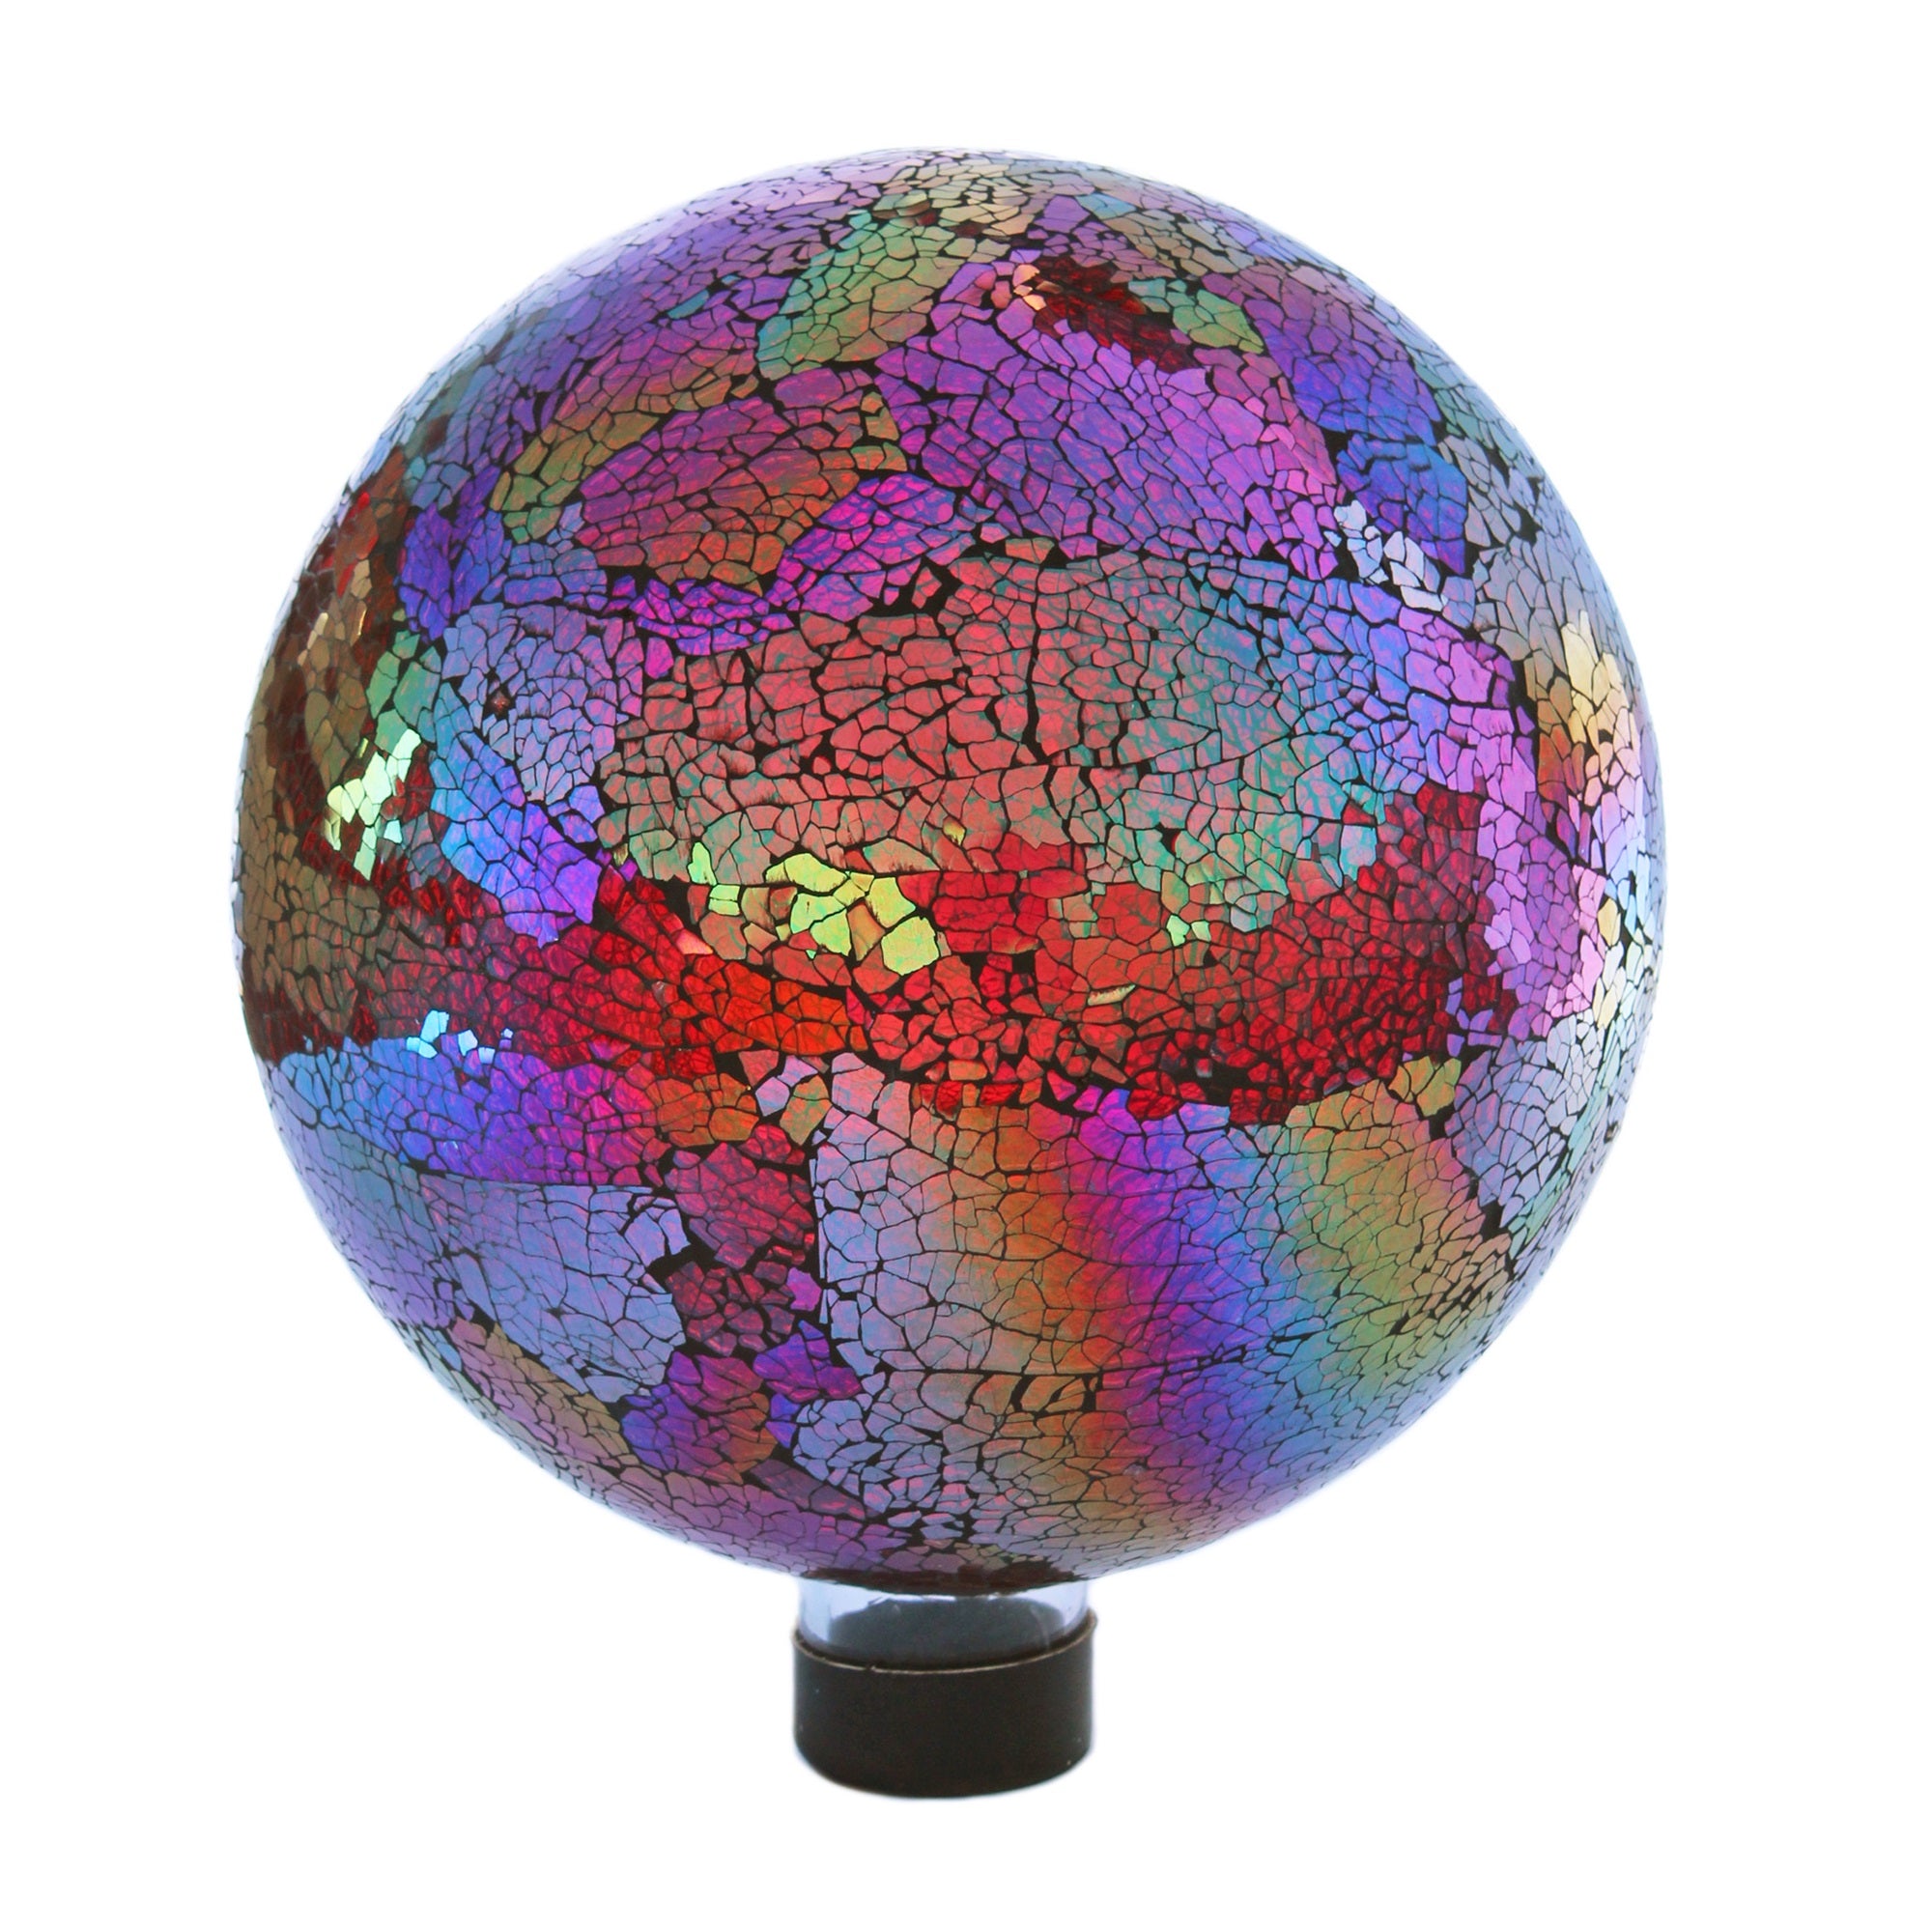 Gardener Select Mosaic Multi Color-Toned Gazing Globe, 10"